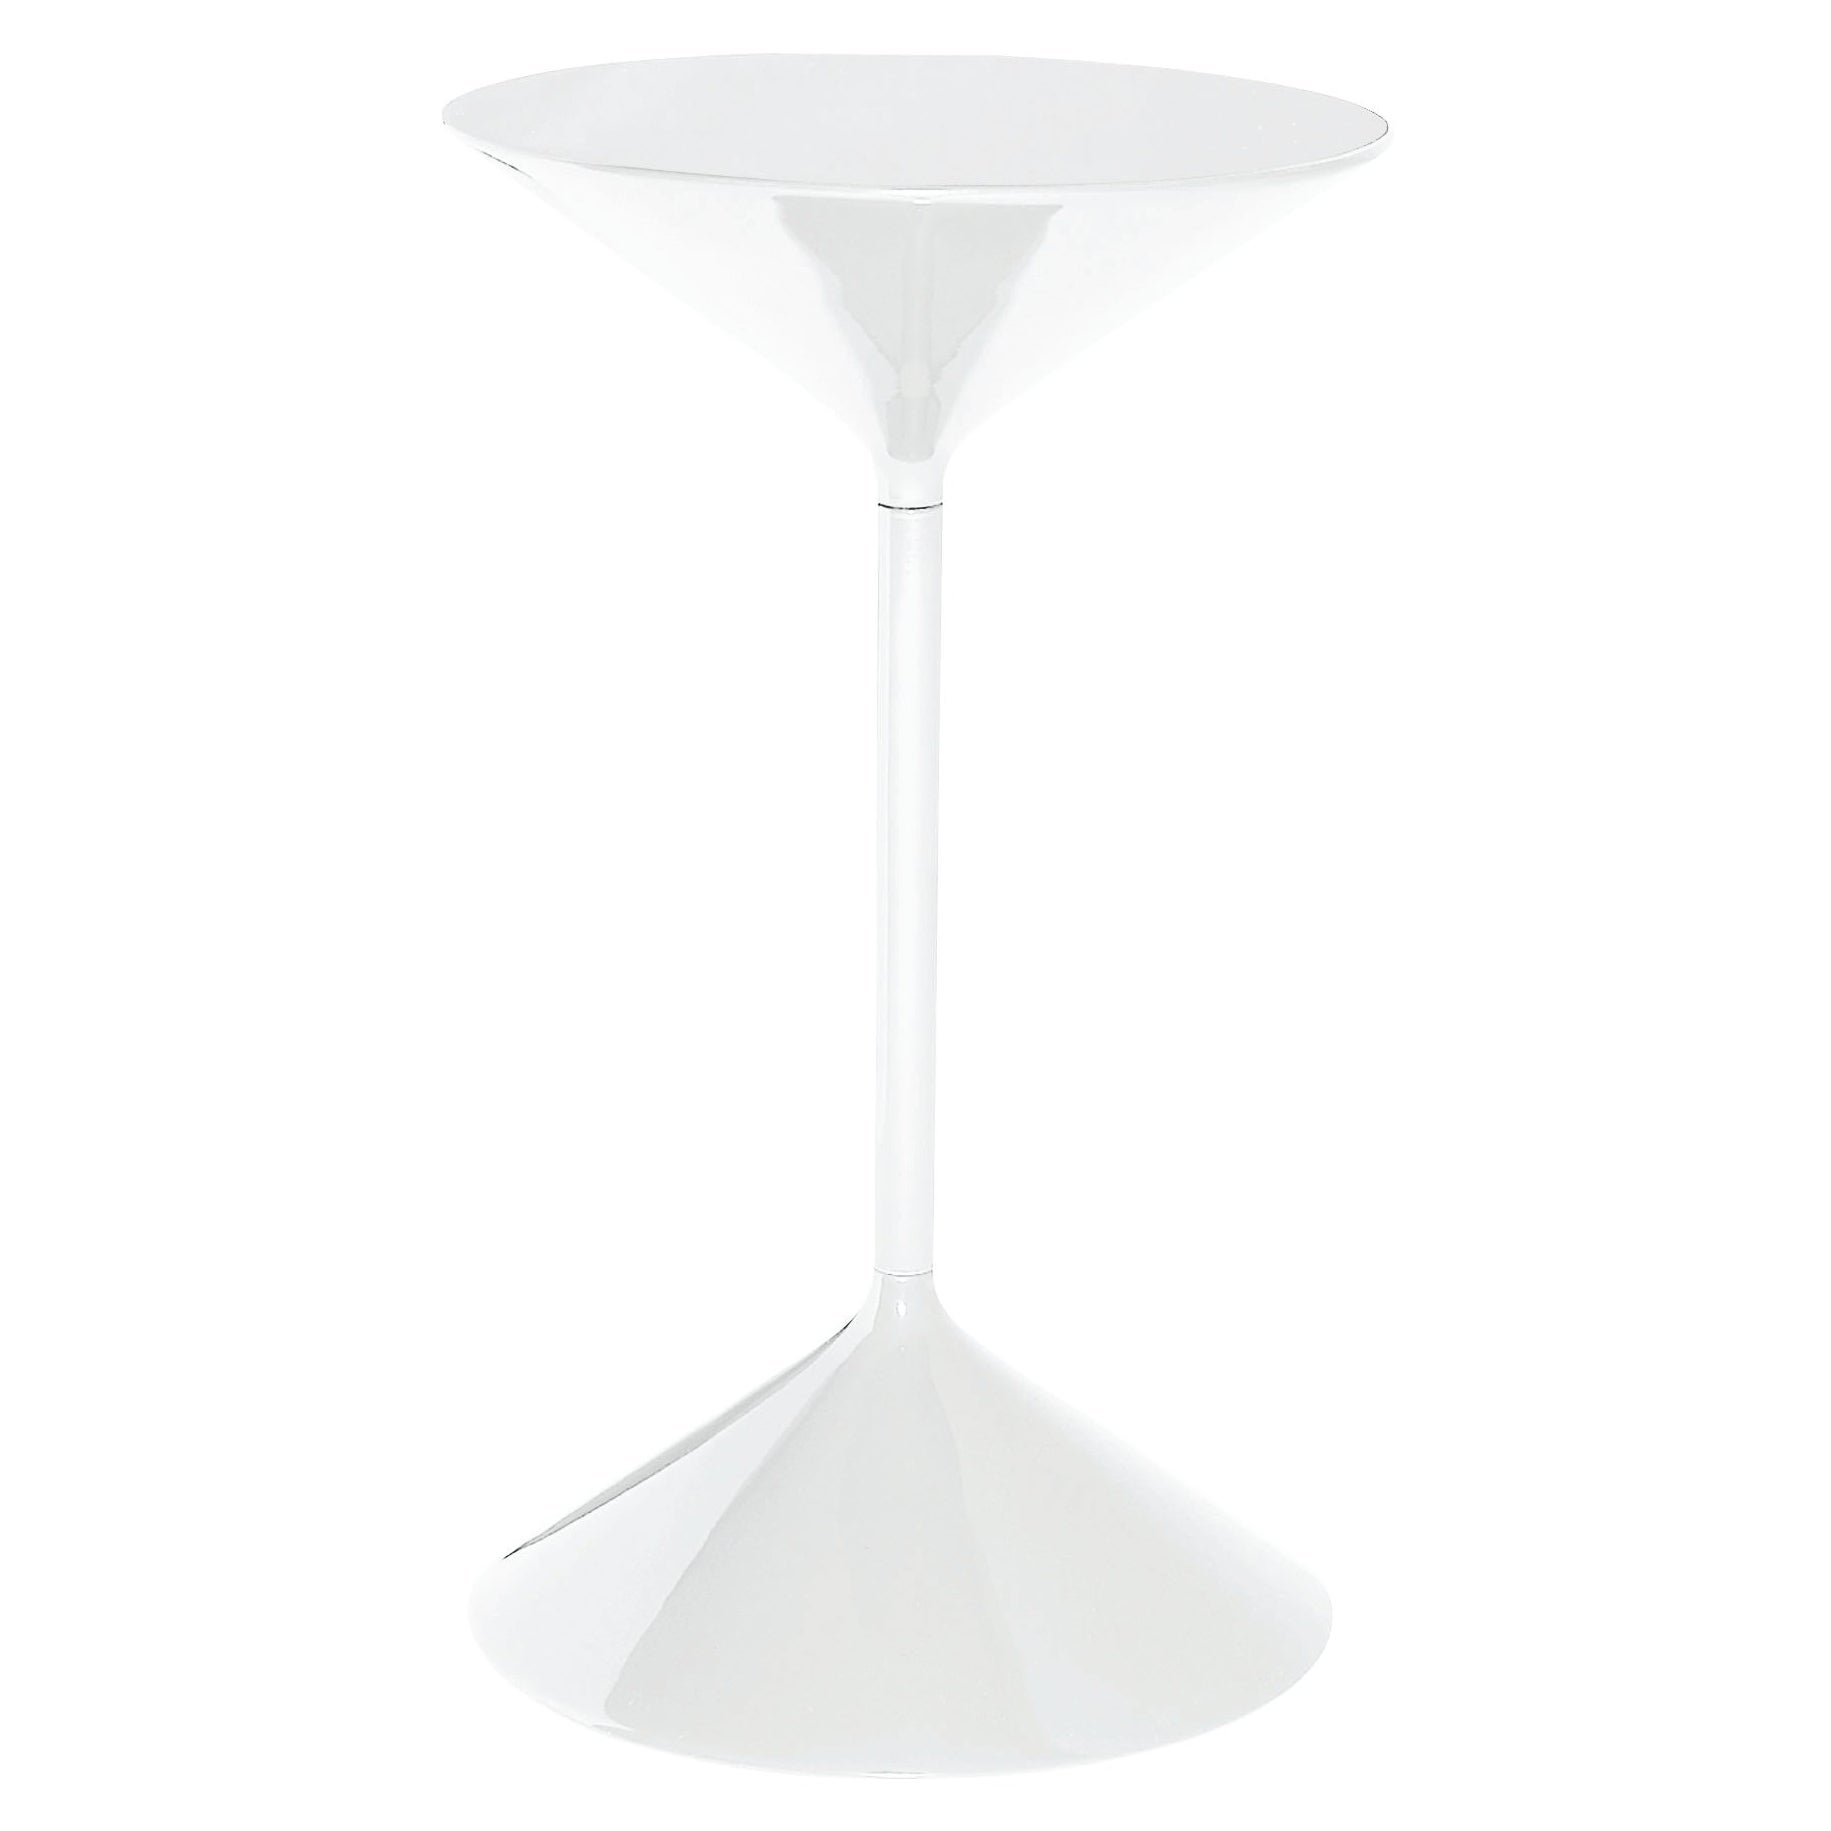 Zanotta Tempo Small Table in White Finish with Lacquered Top by Prospero Rasulo For Sale